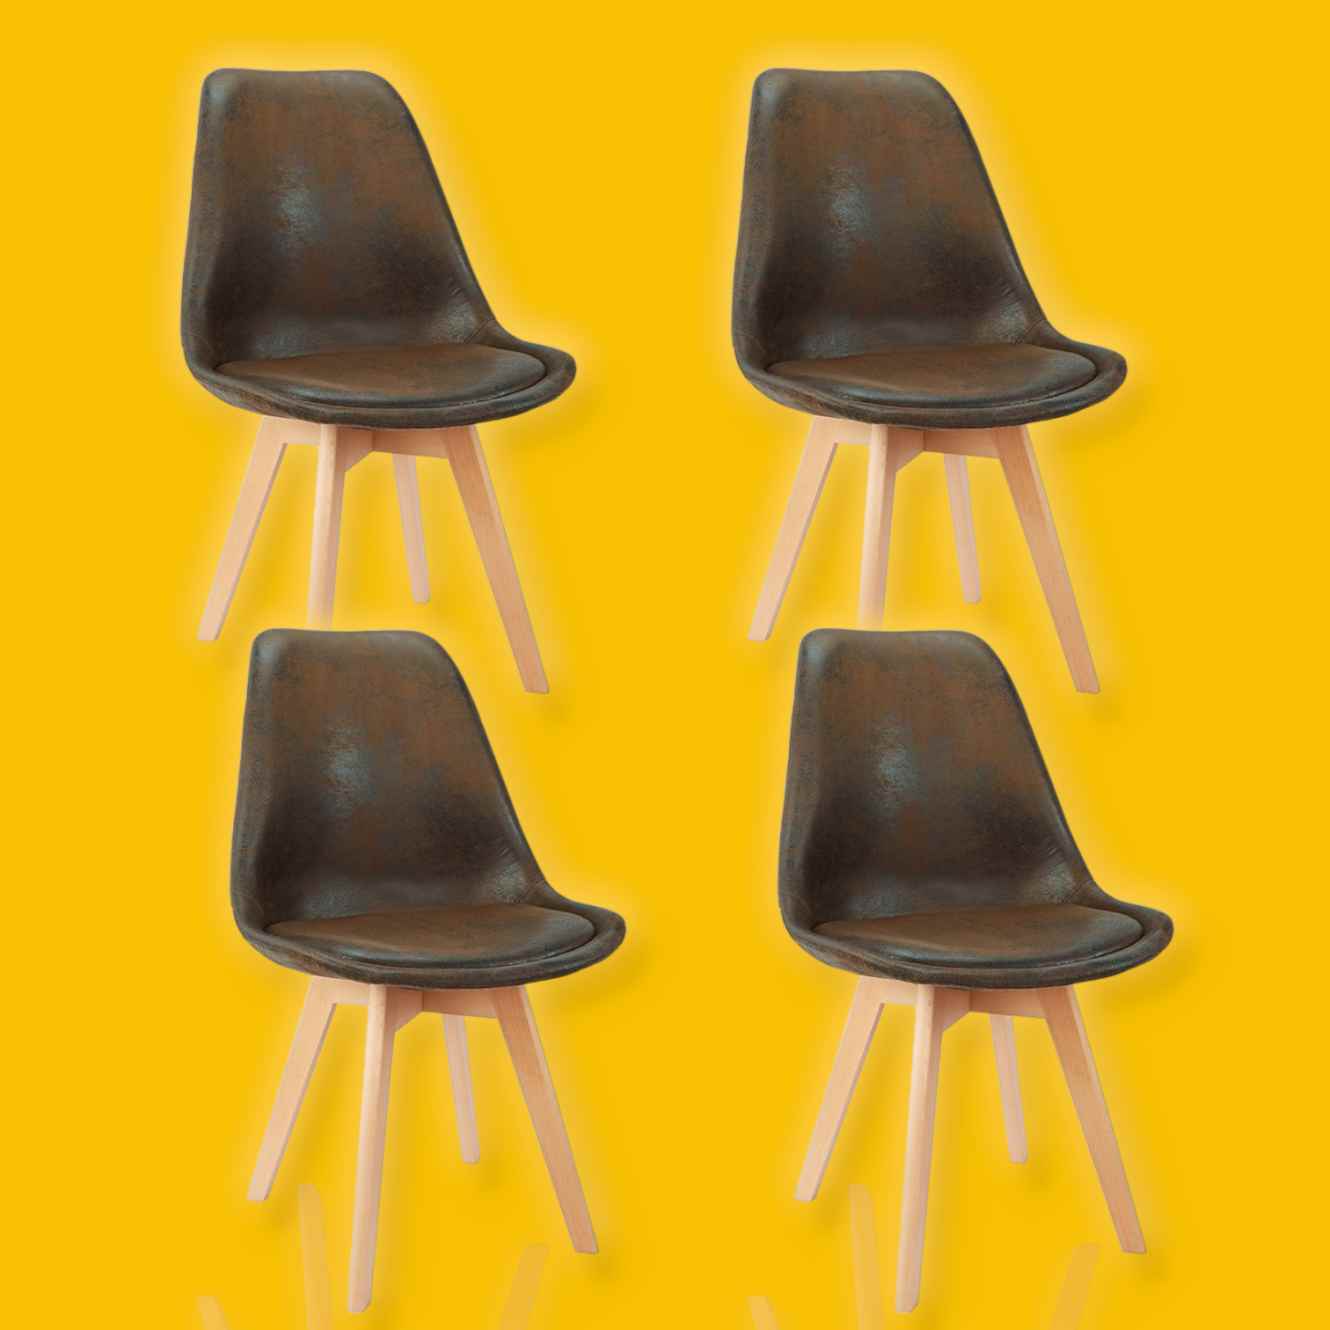 Offerta 4 sedie gambe in legno seduta ecopelle colore marrone - XLAB Design